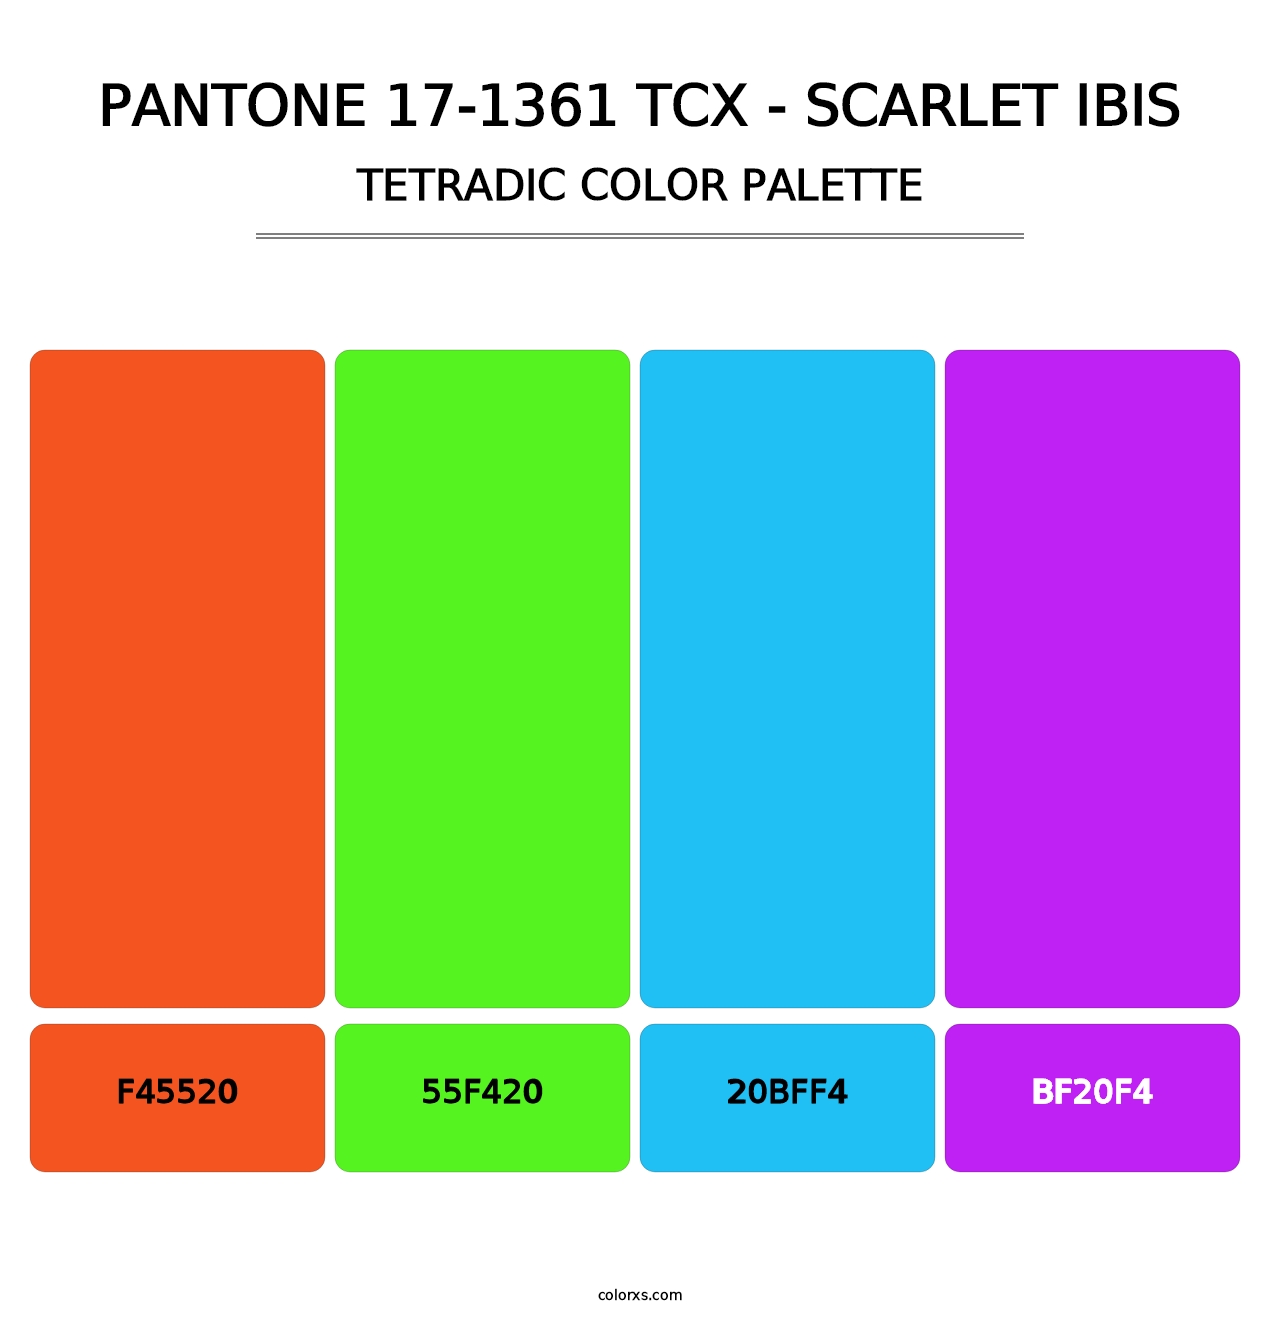 PANTONE 17-1361 TCX - Scarlet Ibis - Tetradic Color Palette